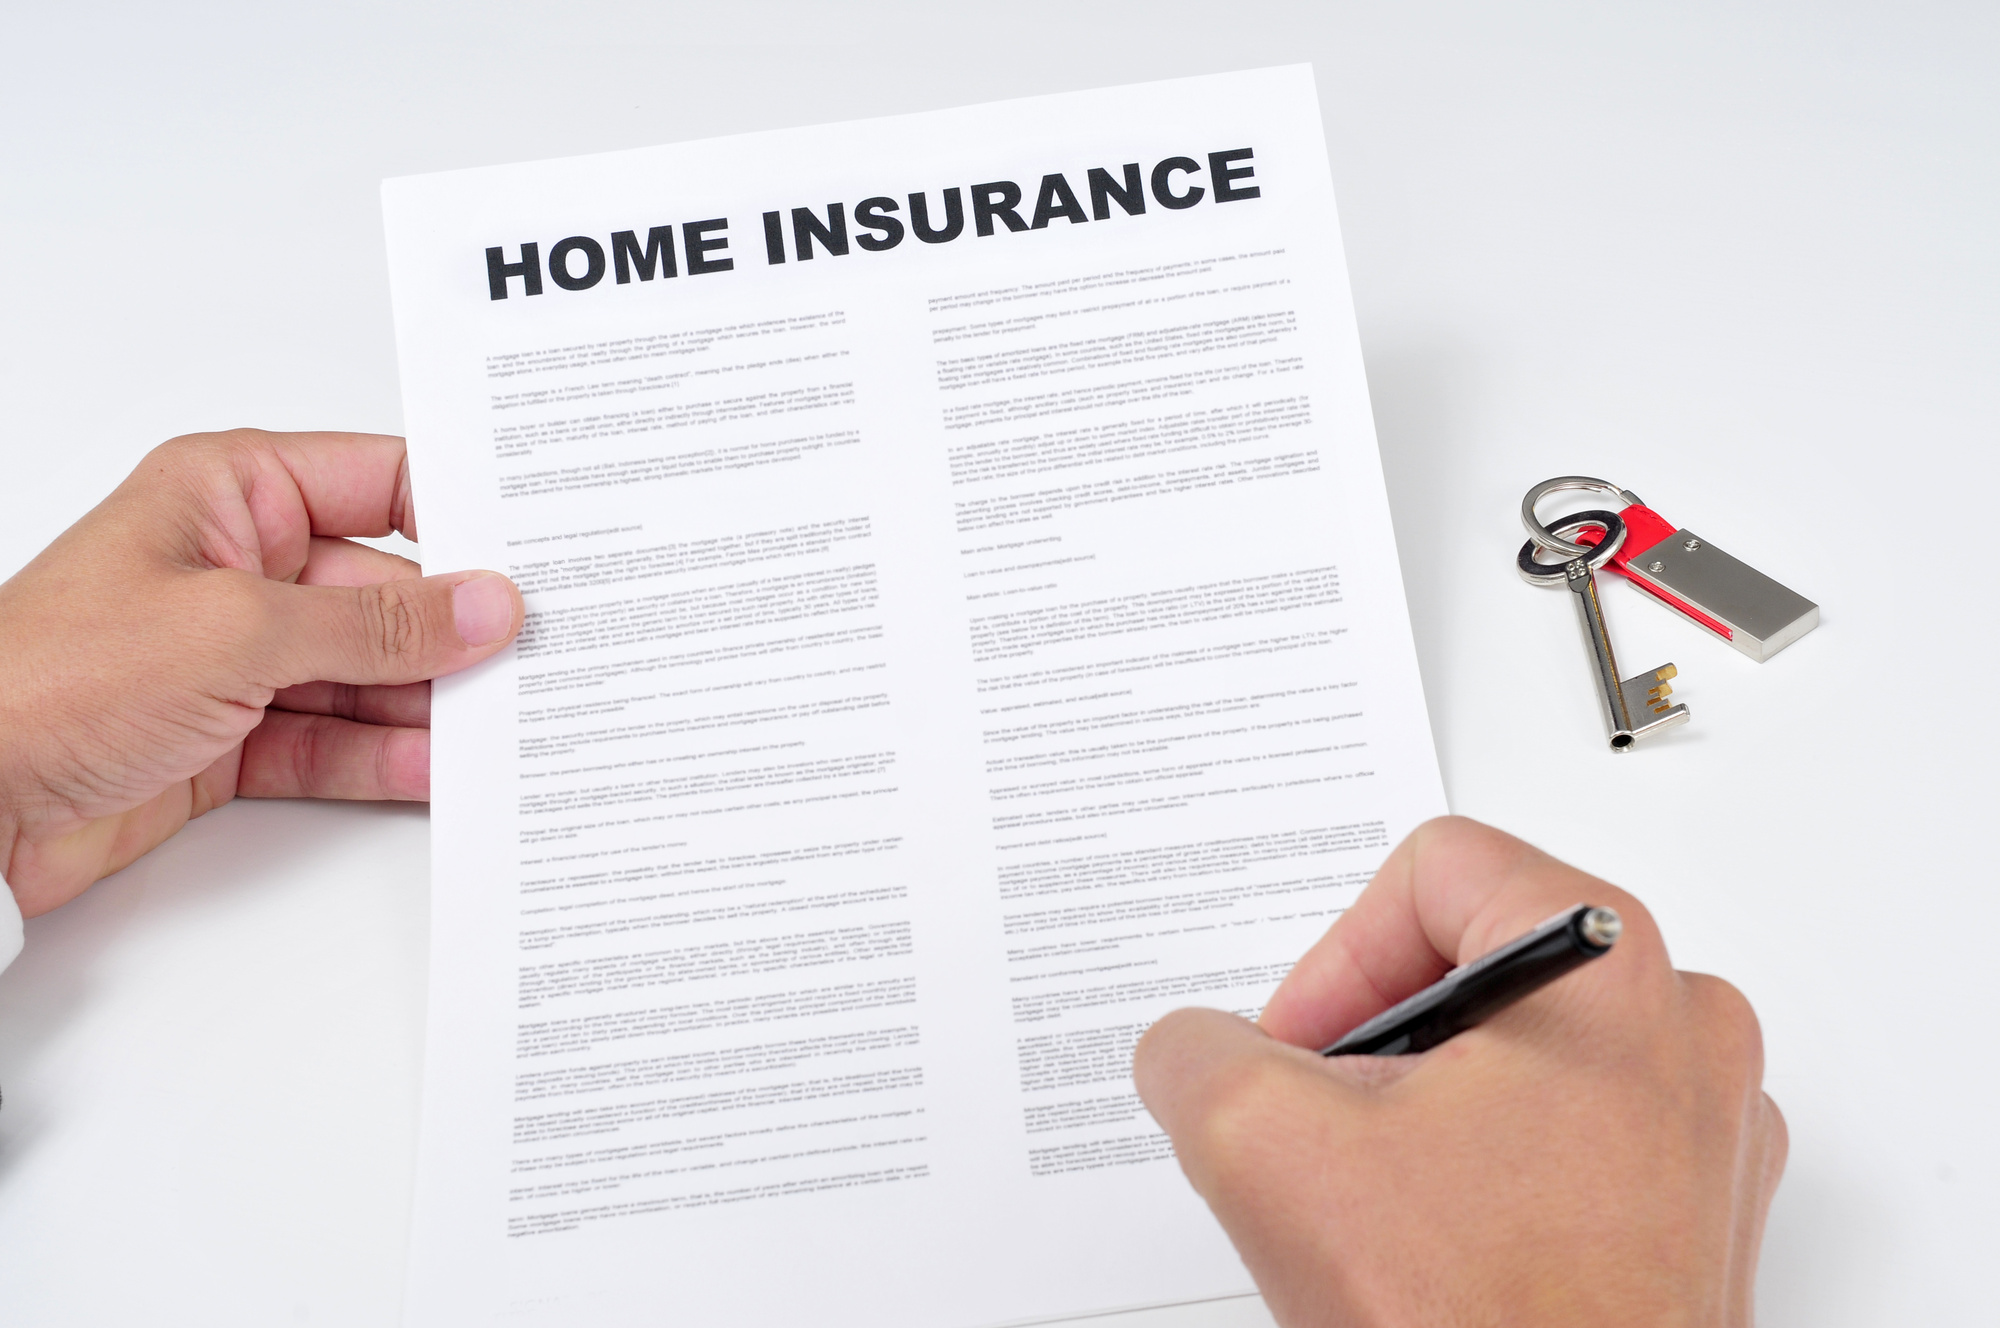 Home Insurance Tips